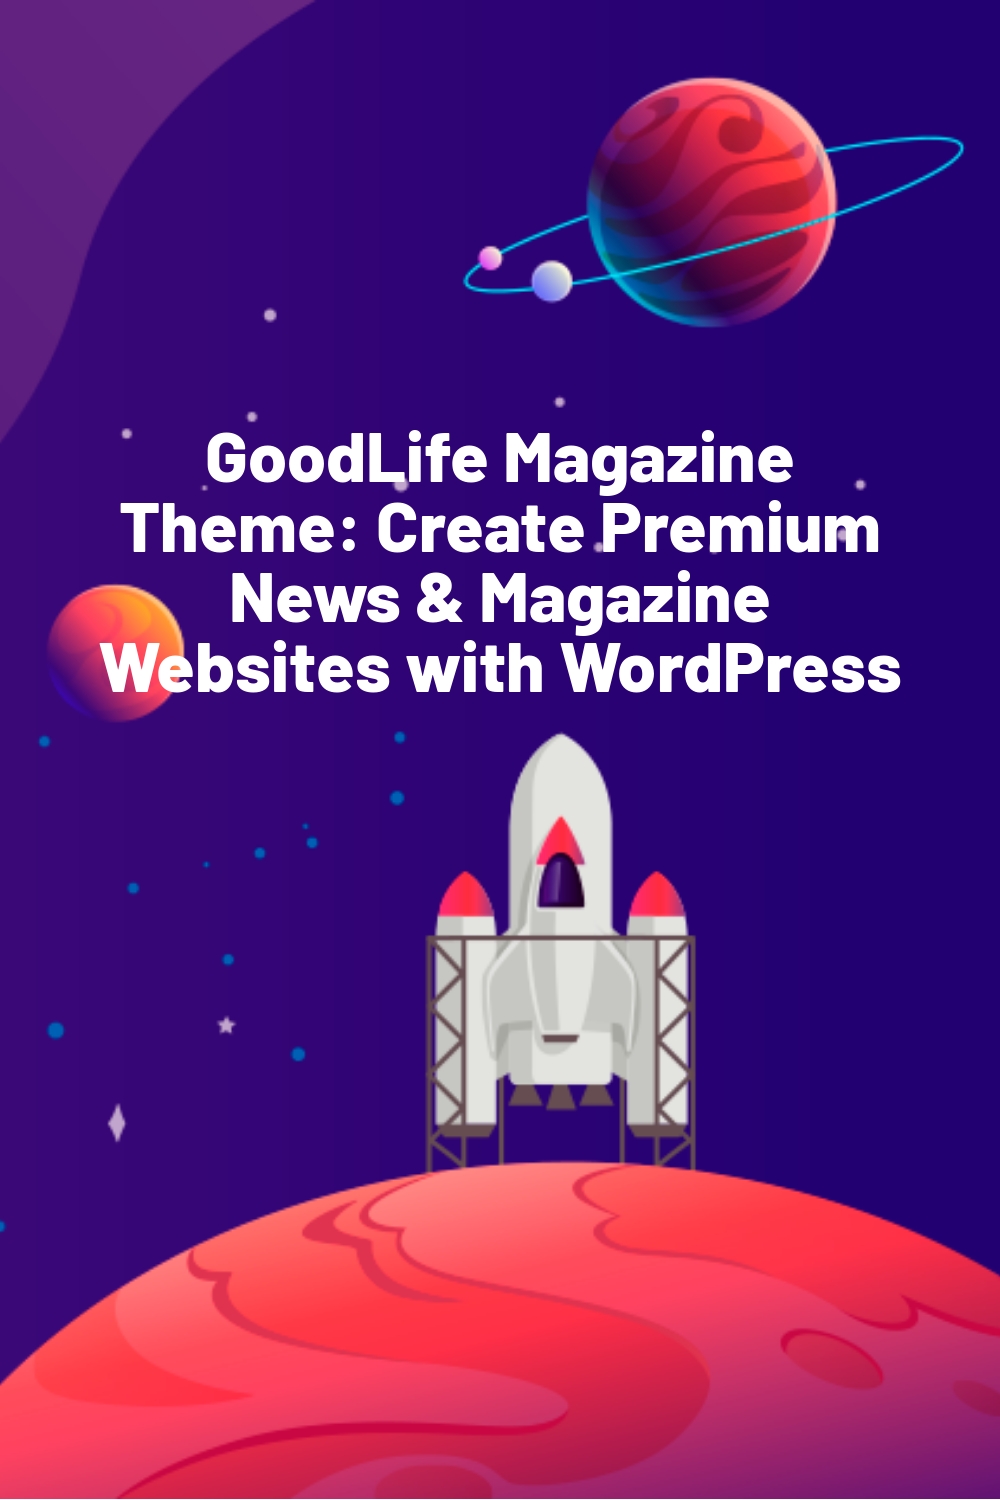 GoodLife Magazine Theme: Create Premium News & Magazine Websites with WordPress